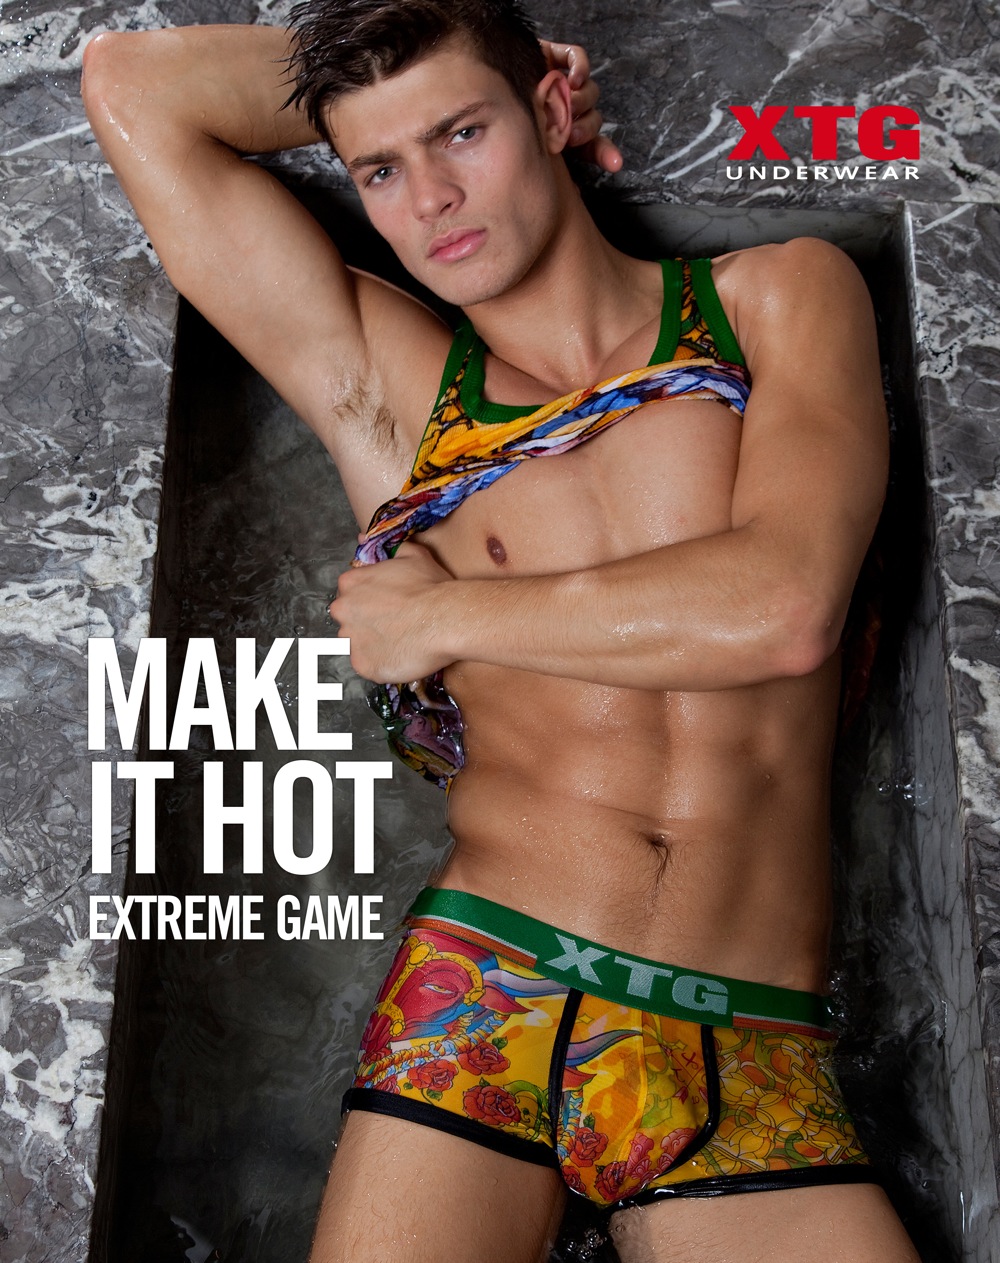 XTG, extreme games for men's underwear!